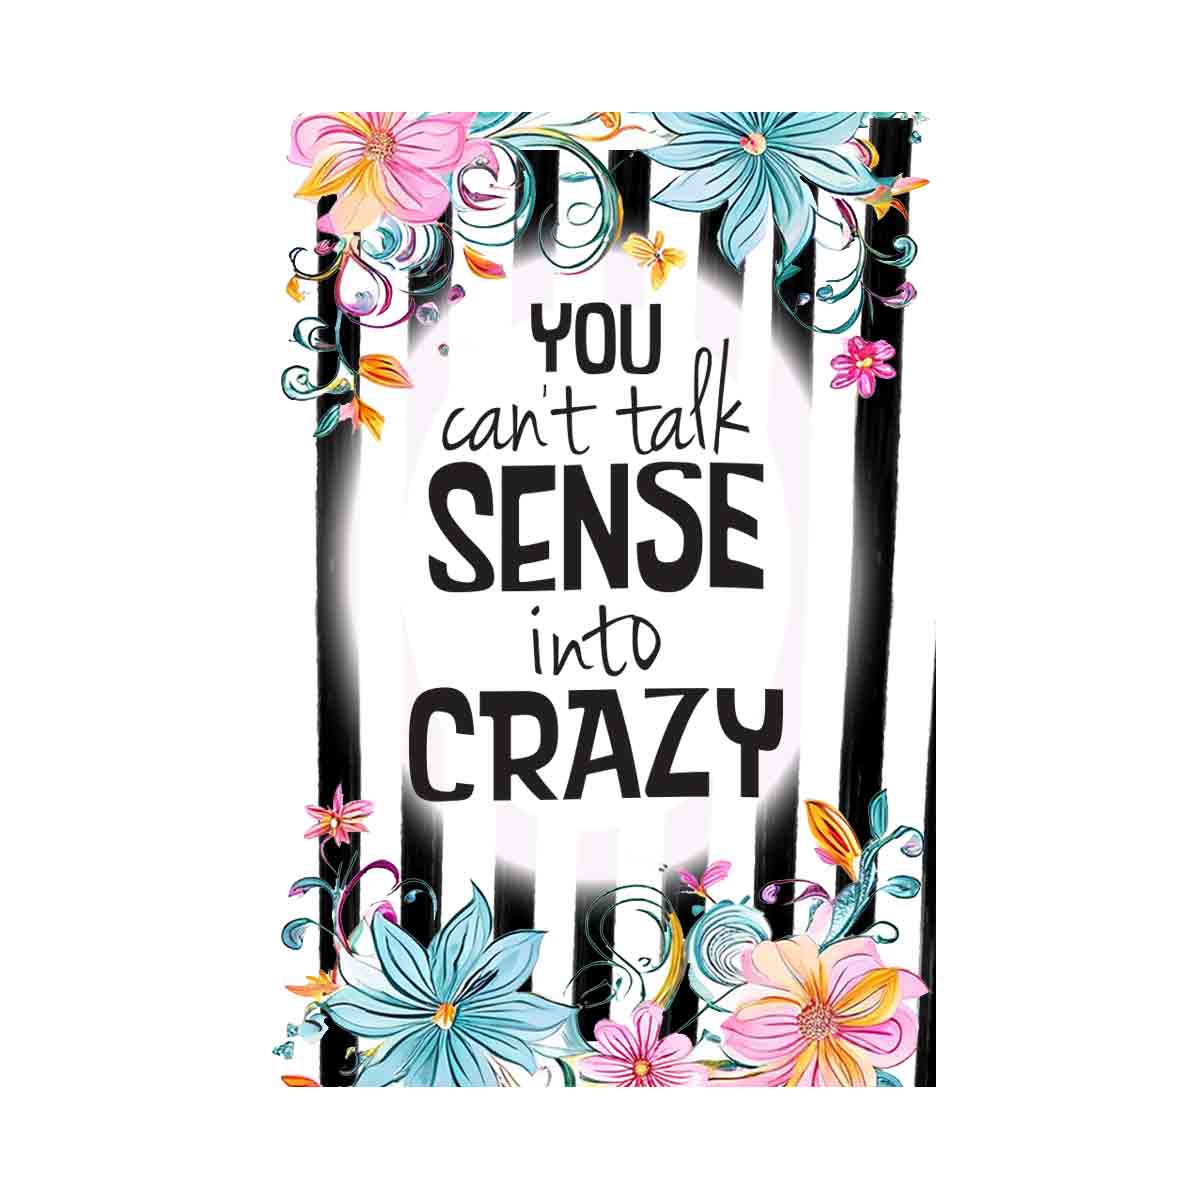 You can't talk sense into crazy